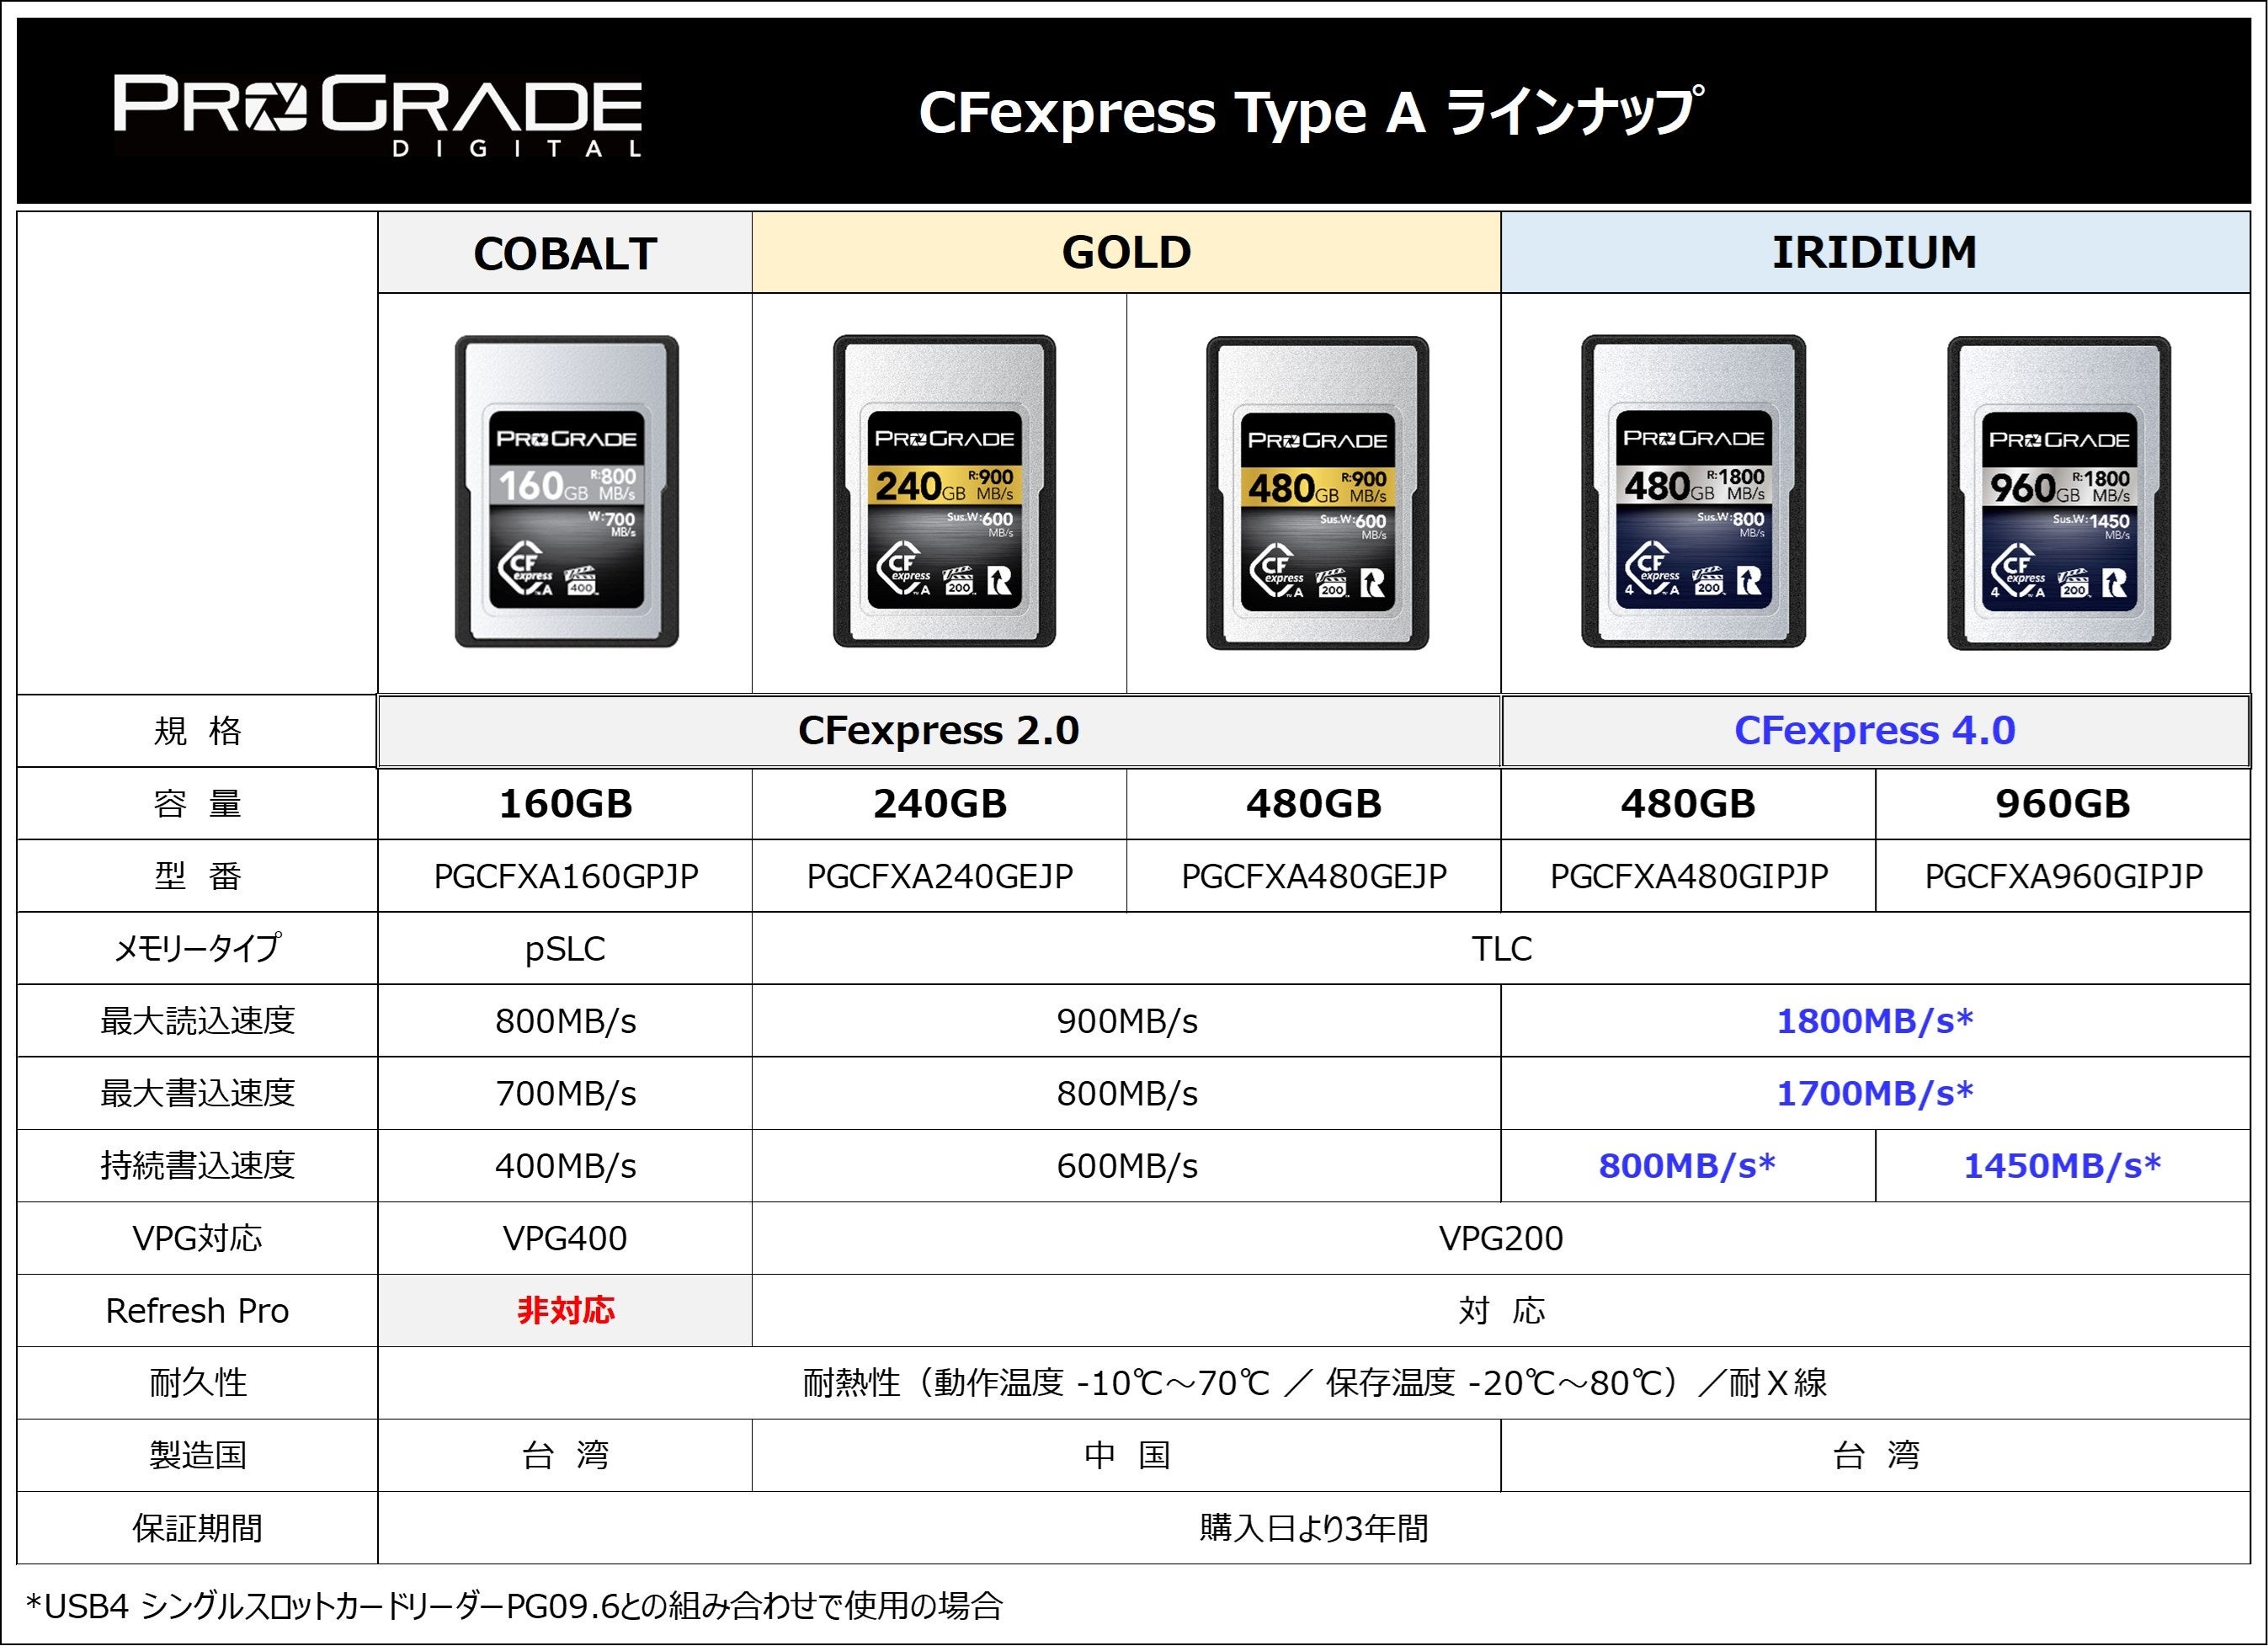 CFexpress 4.0 Type A CWE480GB/960GBAmazonŔ̔Jn